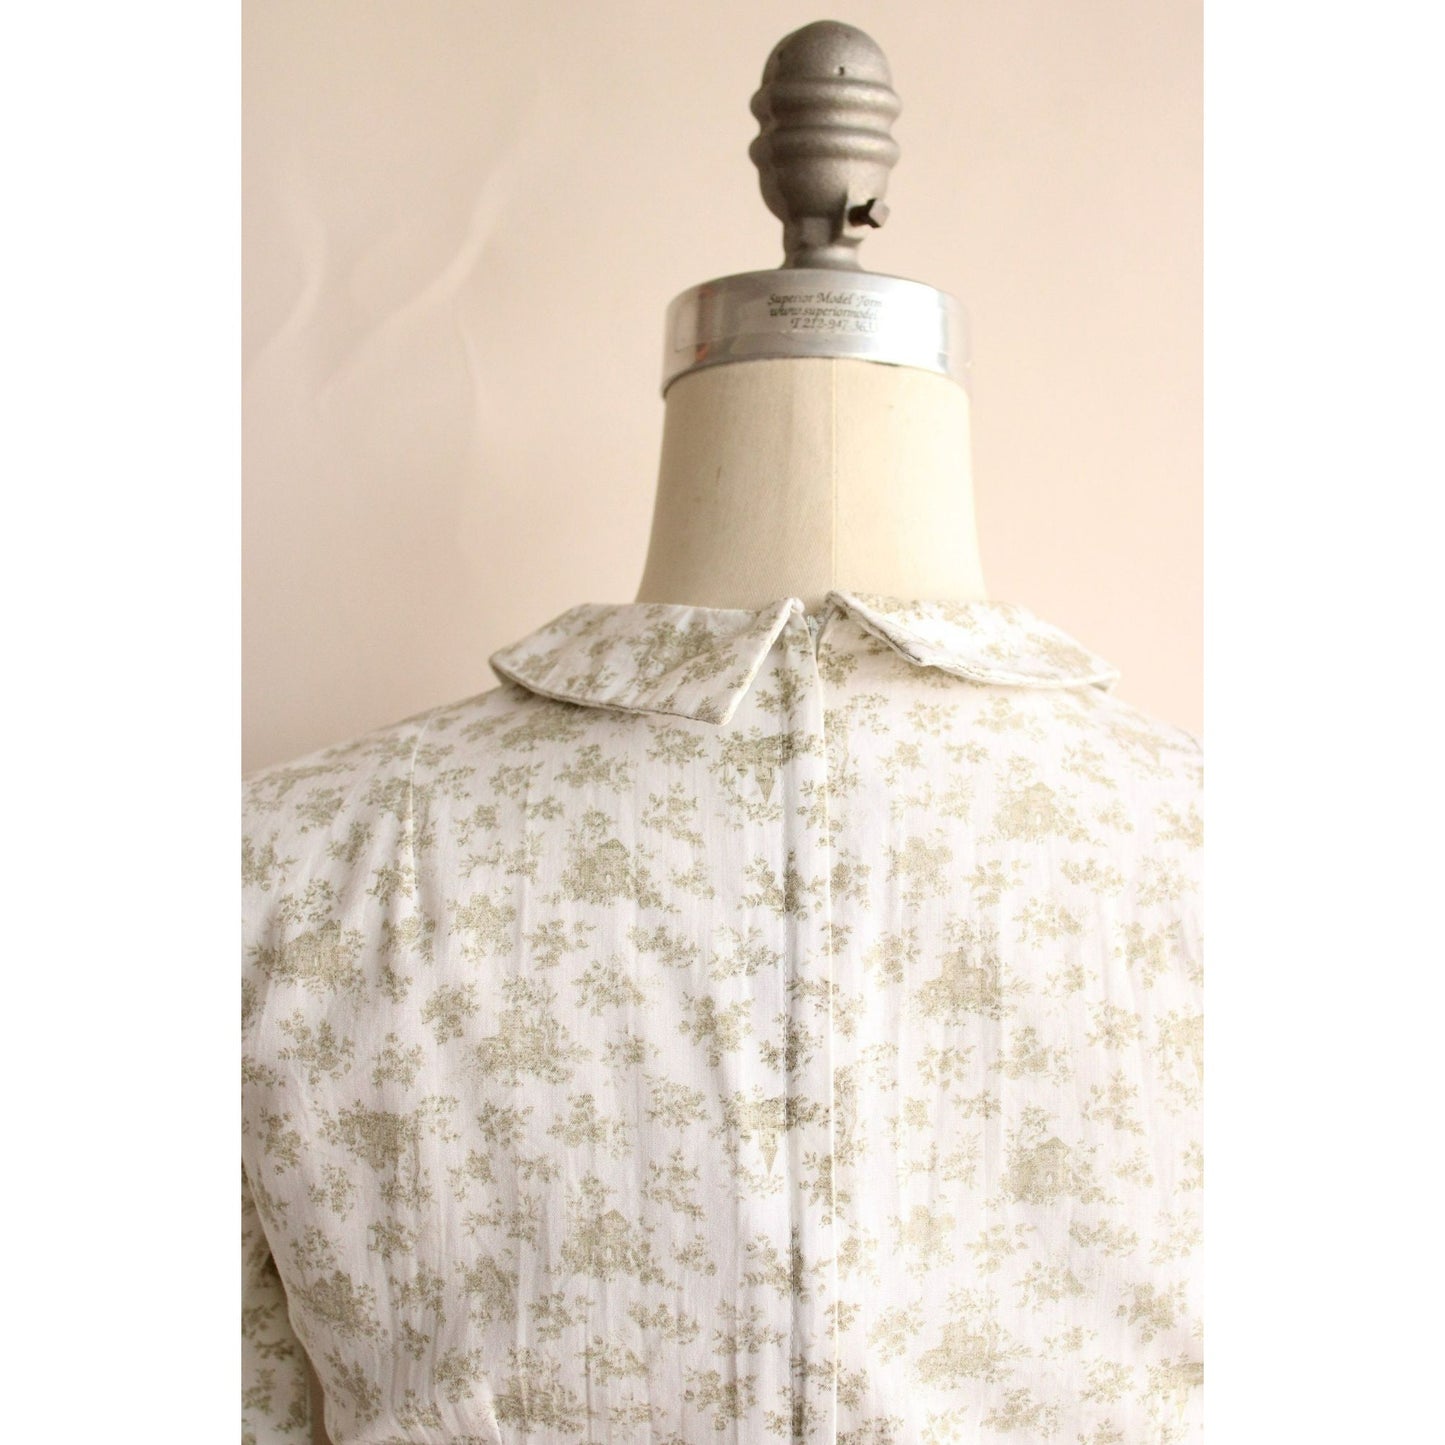 Vintage 1960s Green Toile Floral Print Cotton Dress